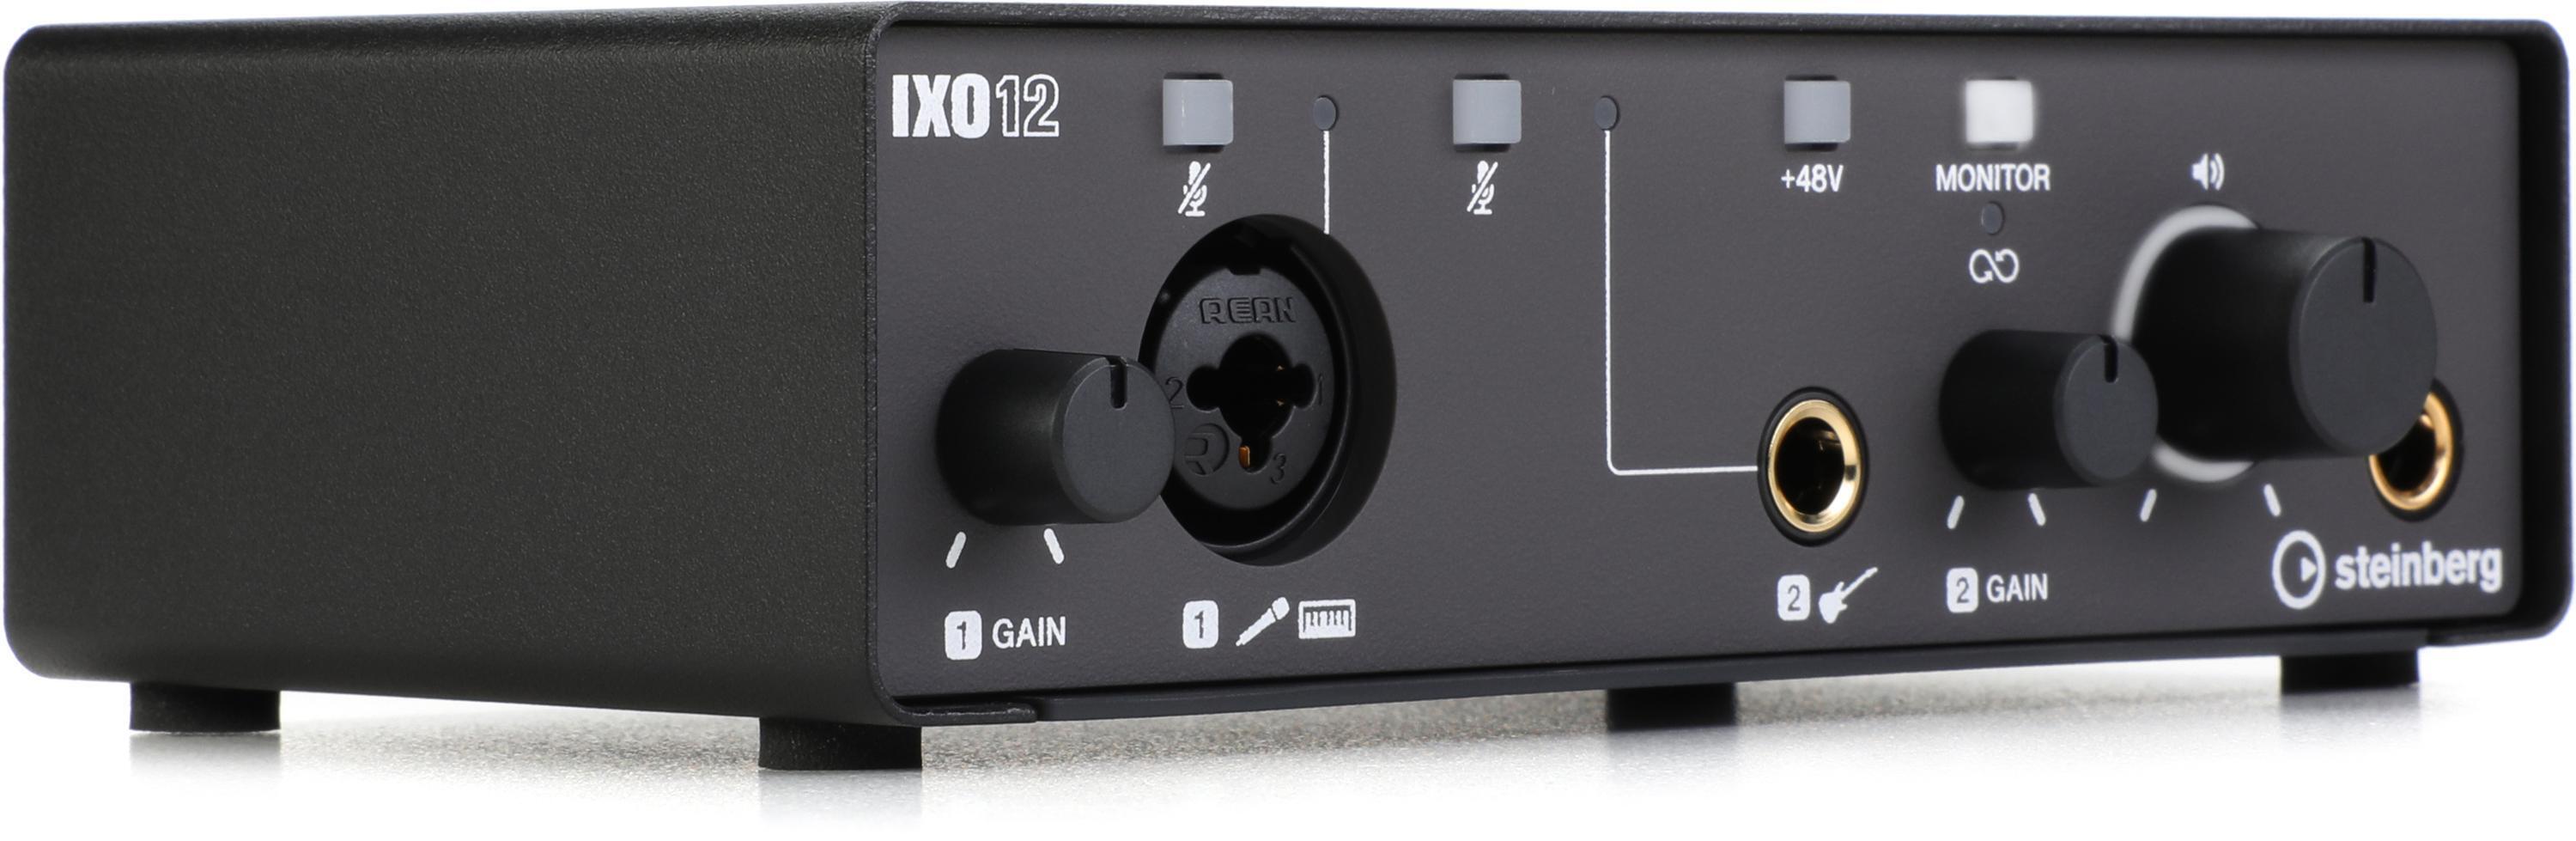 Steinberg IXO12 2x2 USB Audio Interface - Black | Sweetwater